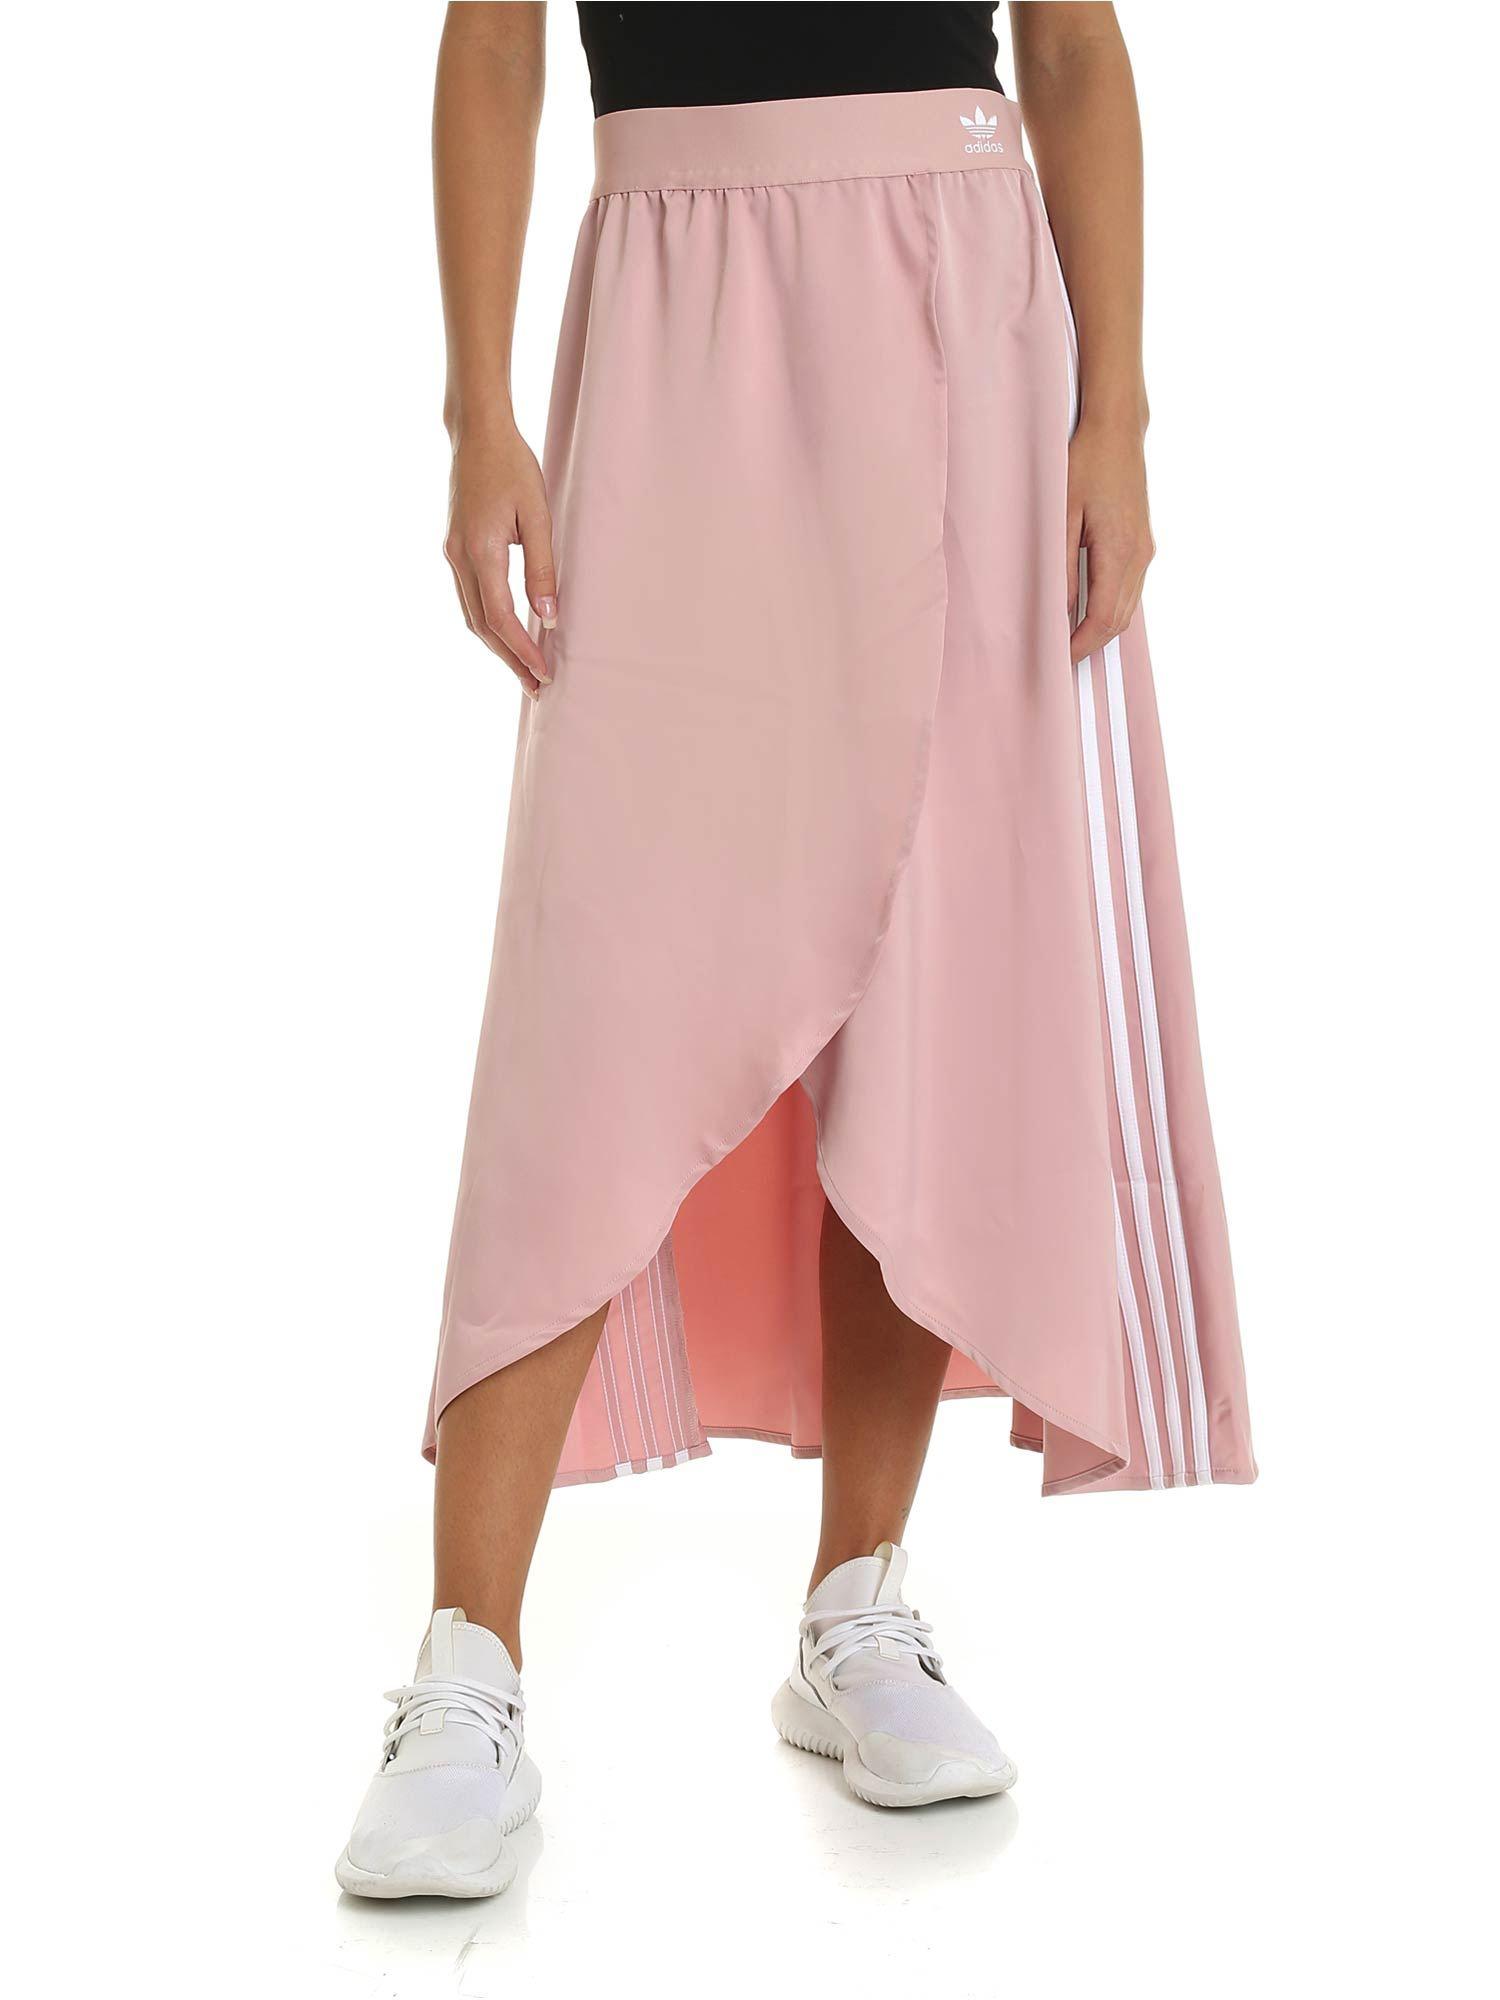 adidas skirt pink